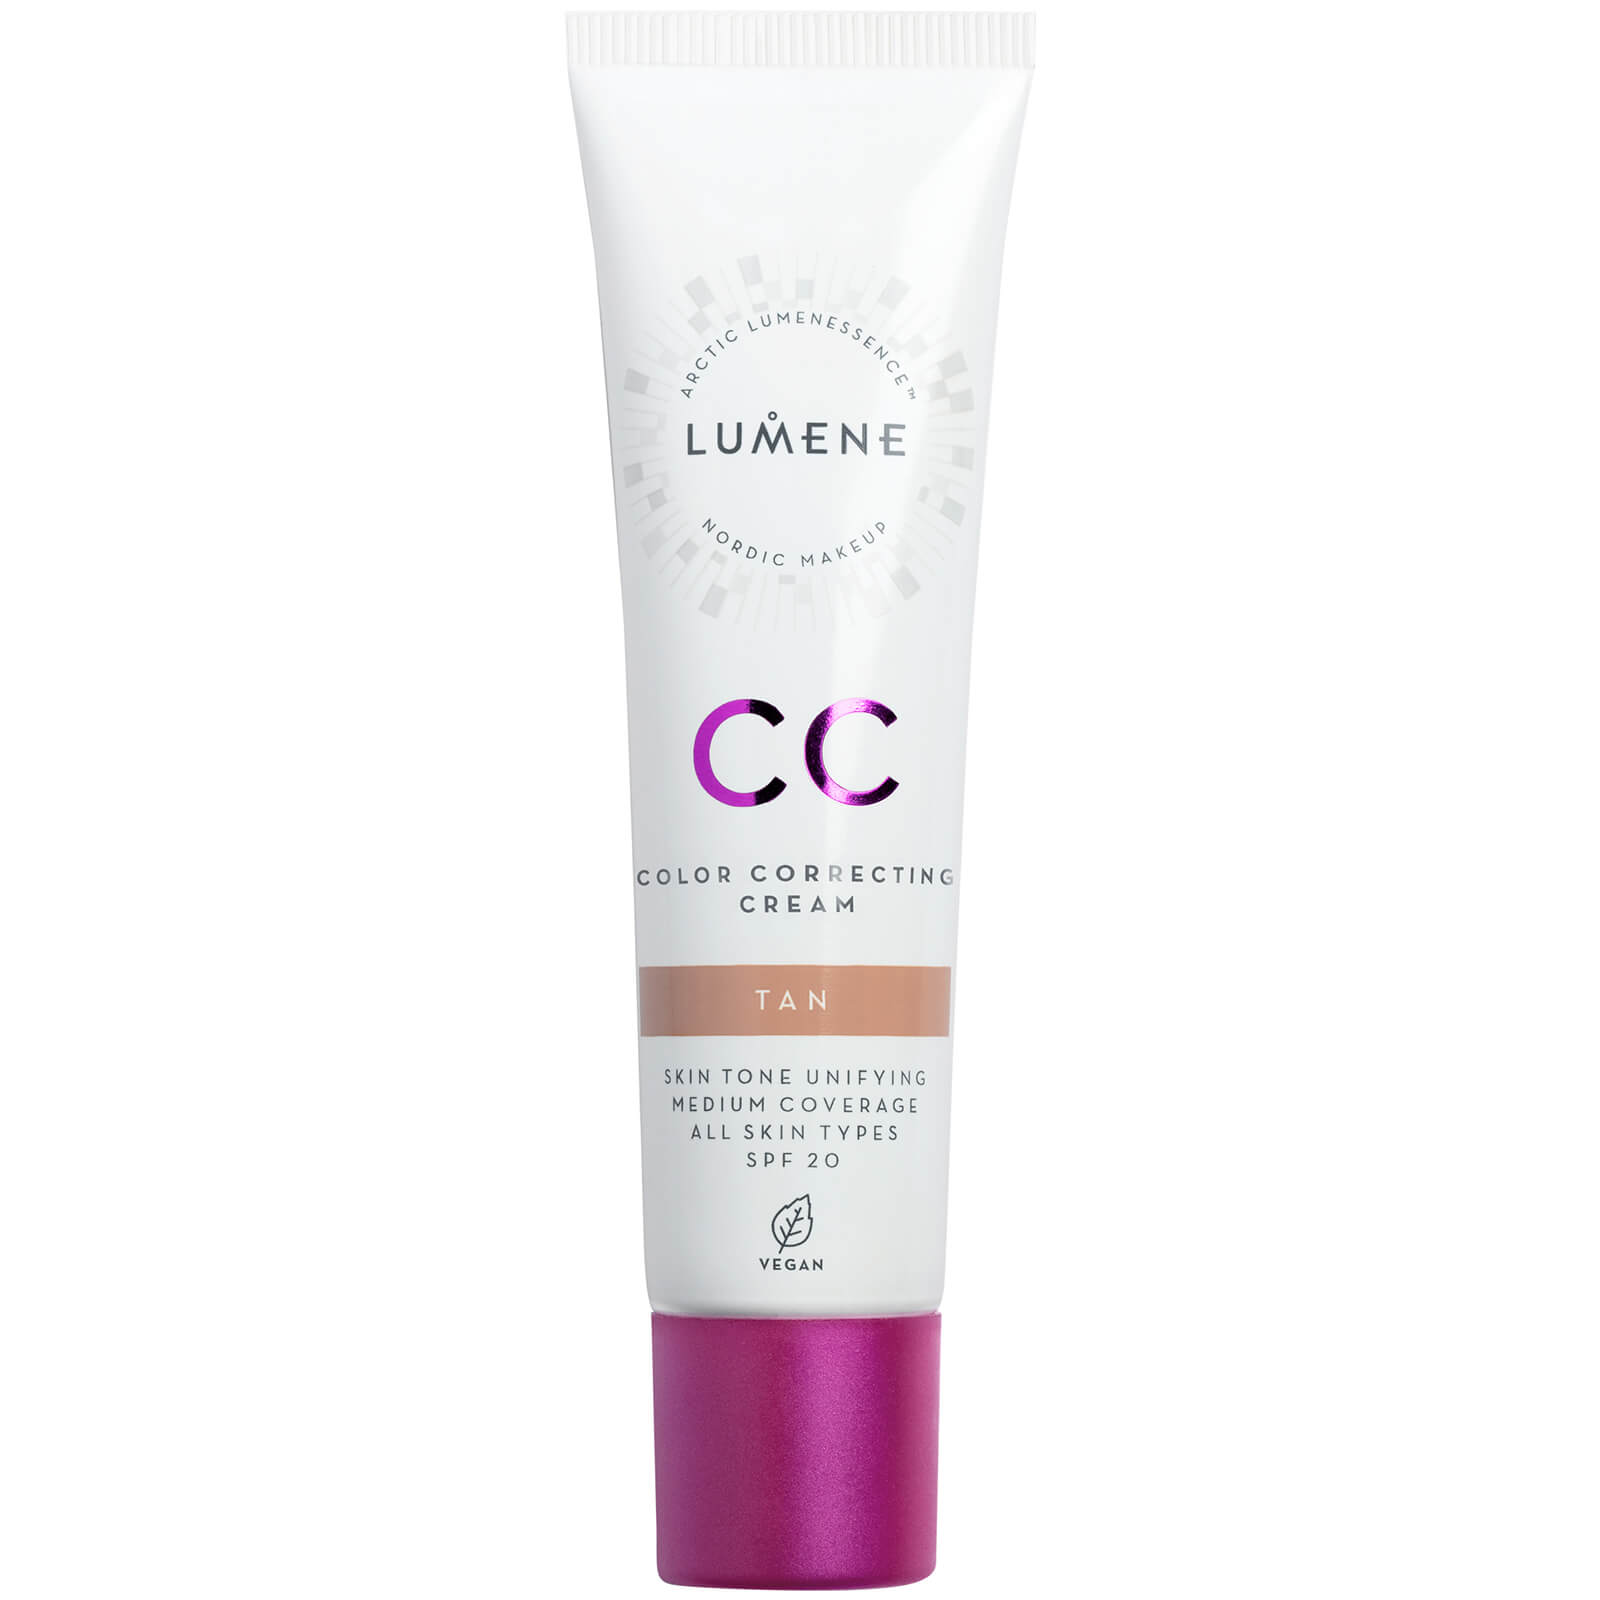 Lumene Cc Colour Correcting Cream Spf20 30ml (various Shades) - Tan